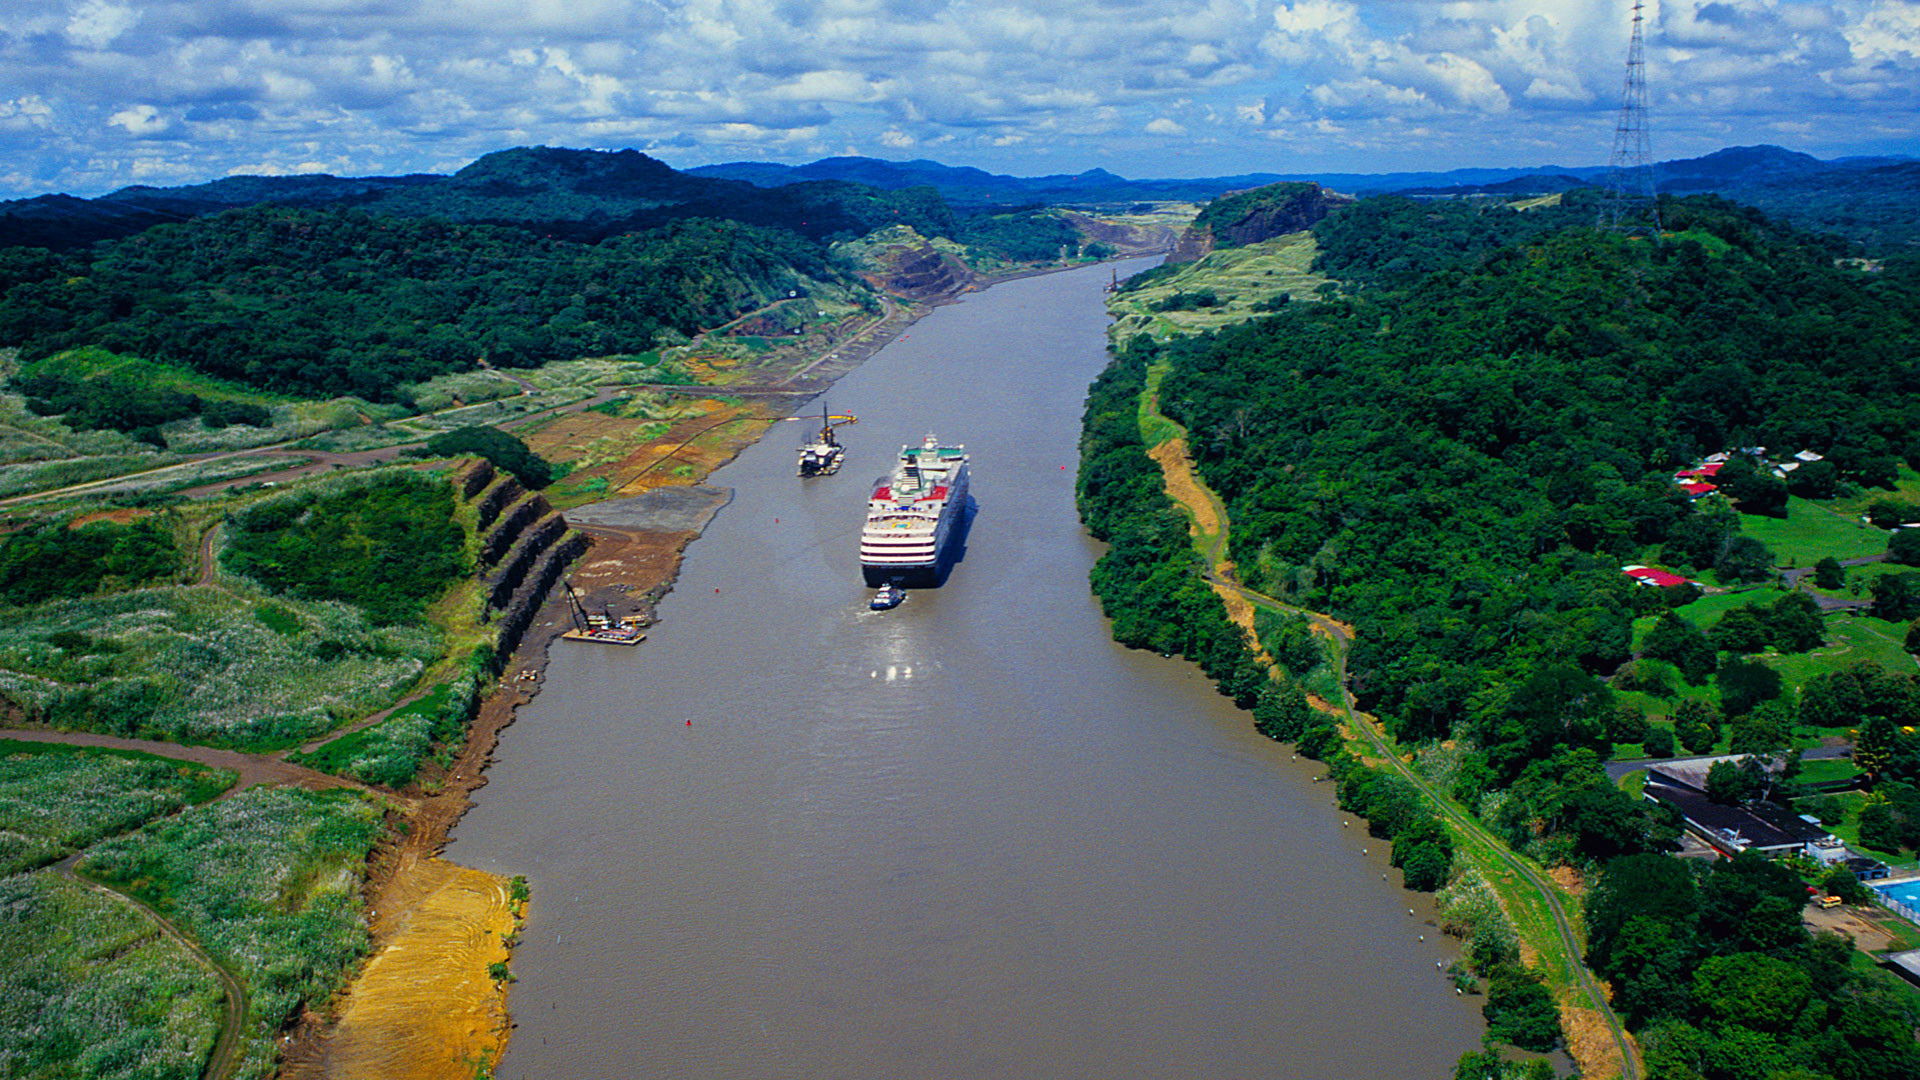 Судоходные реки и озера. Панамский канал Панама. Река Сан Хуан Никарагуа. Аргентина Панамский канал. Панамский канал Панама туризм.